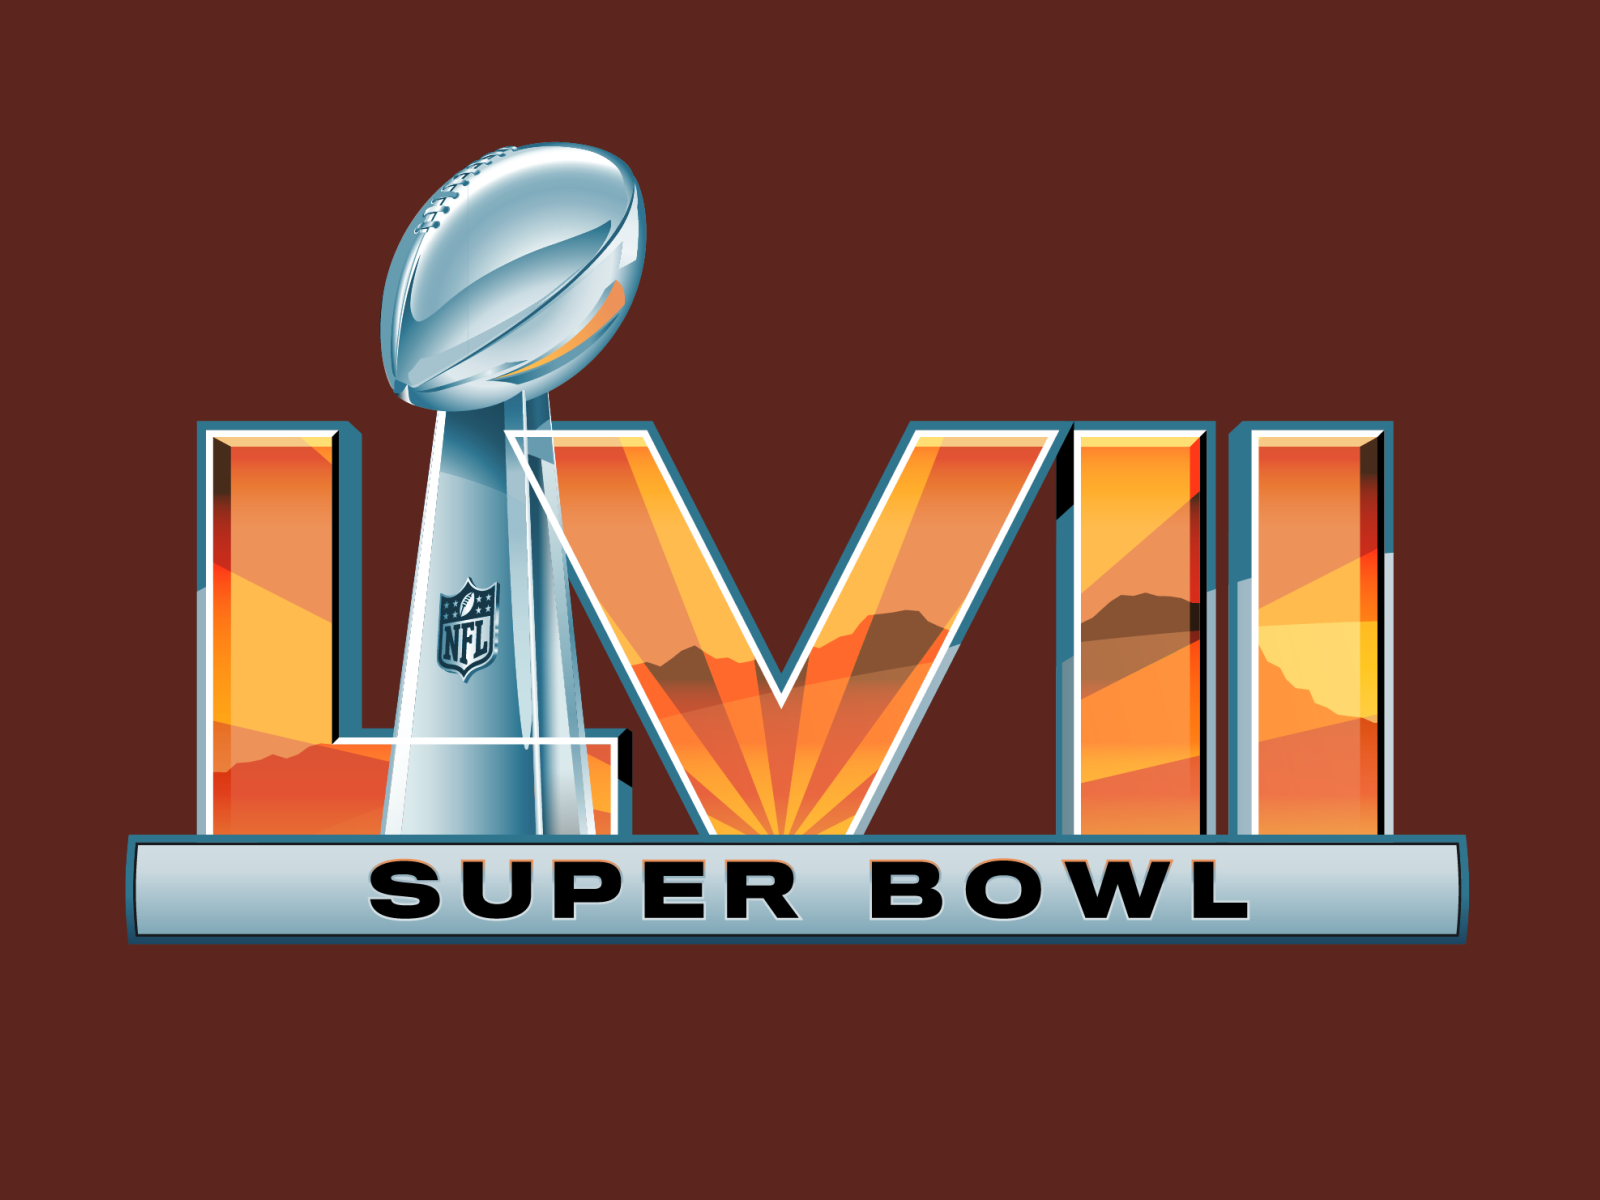 Super bowl show. Супербоул LVII. Super Bowl 2023. Super Bowl LVII логотип. Финал супербоул.